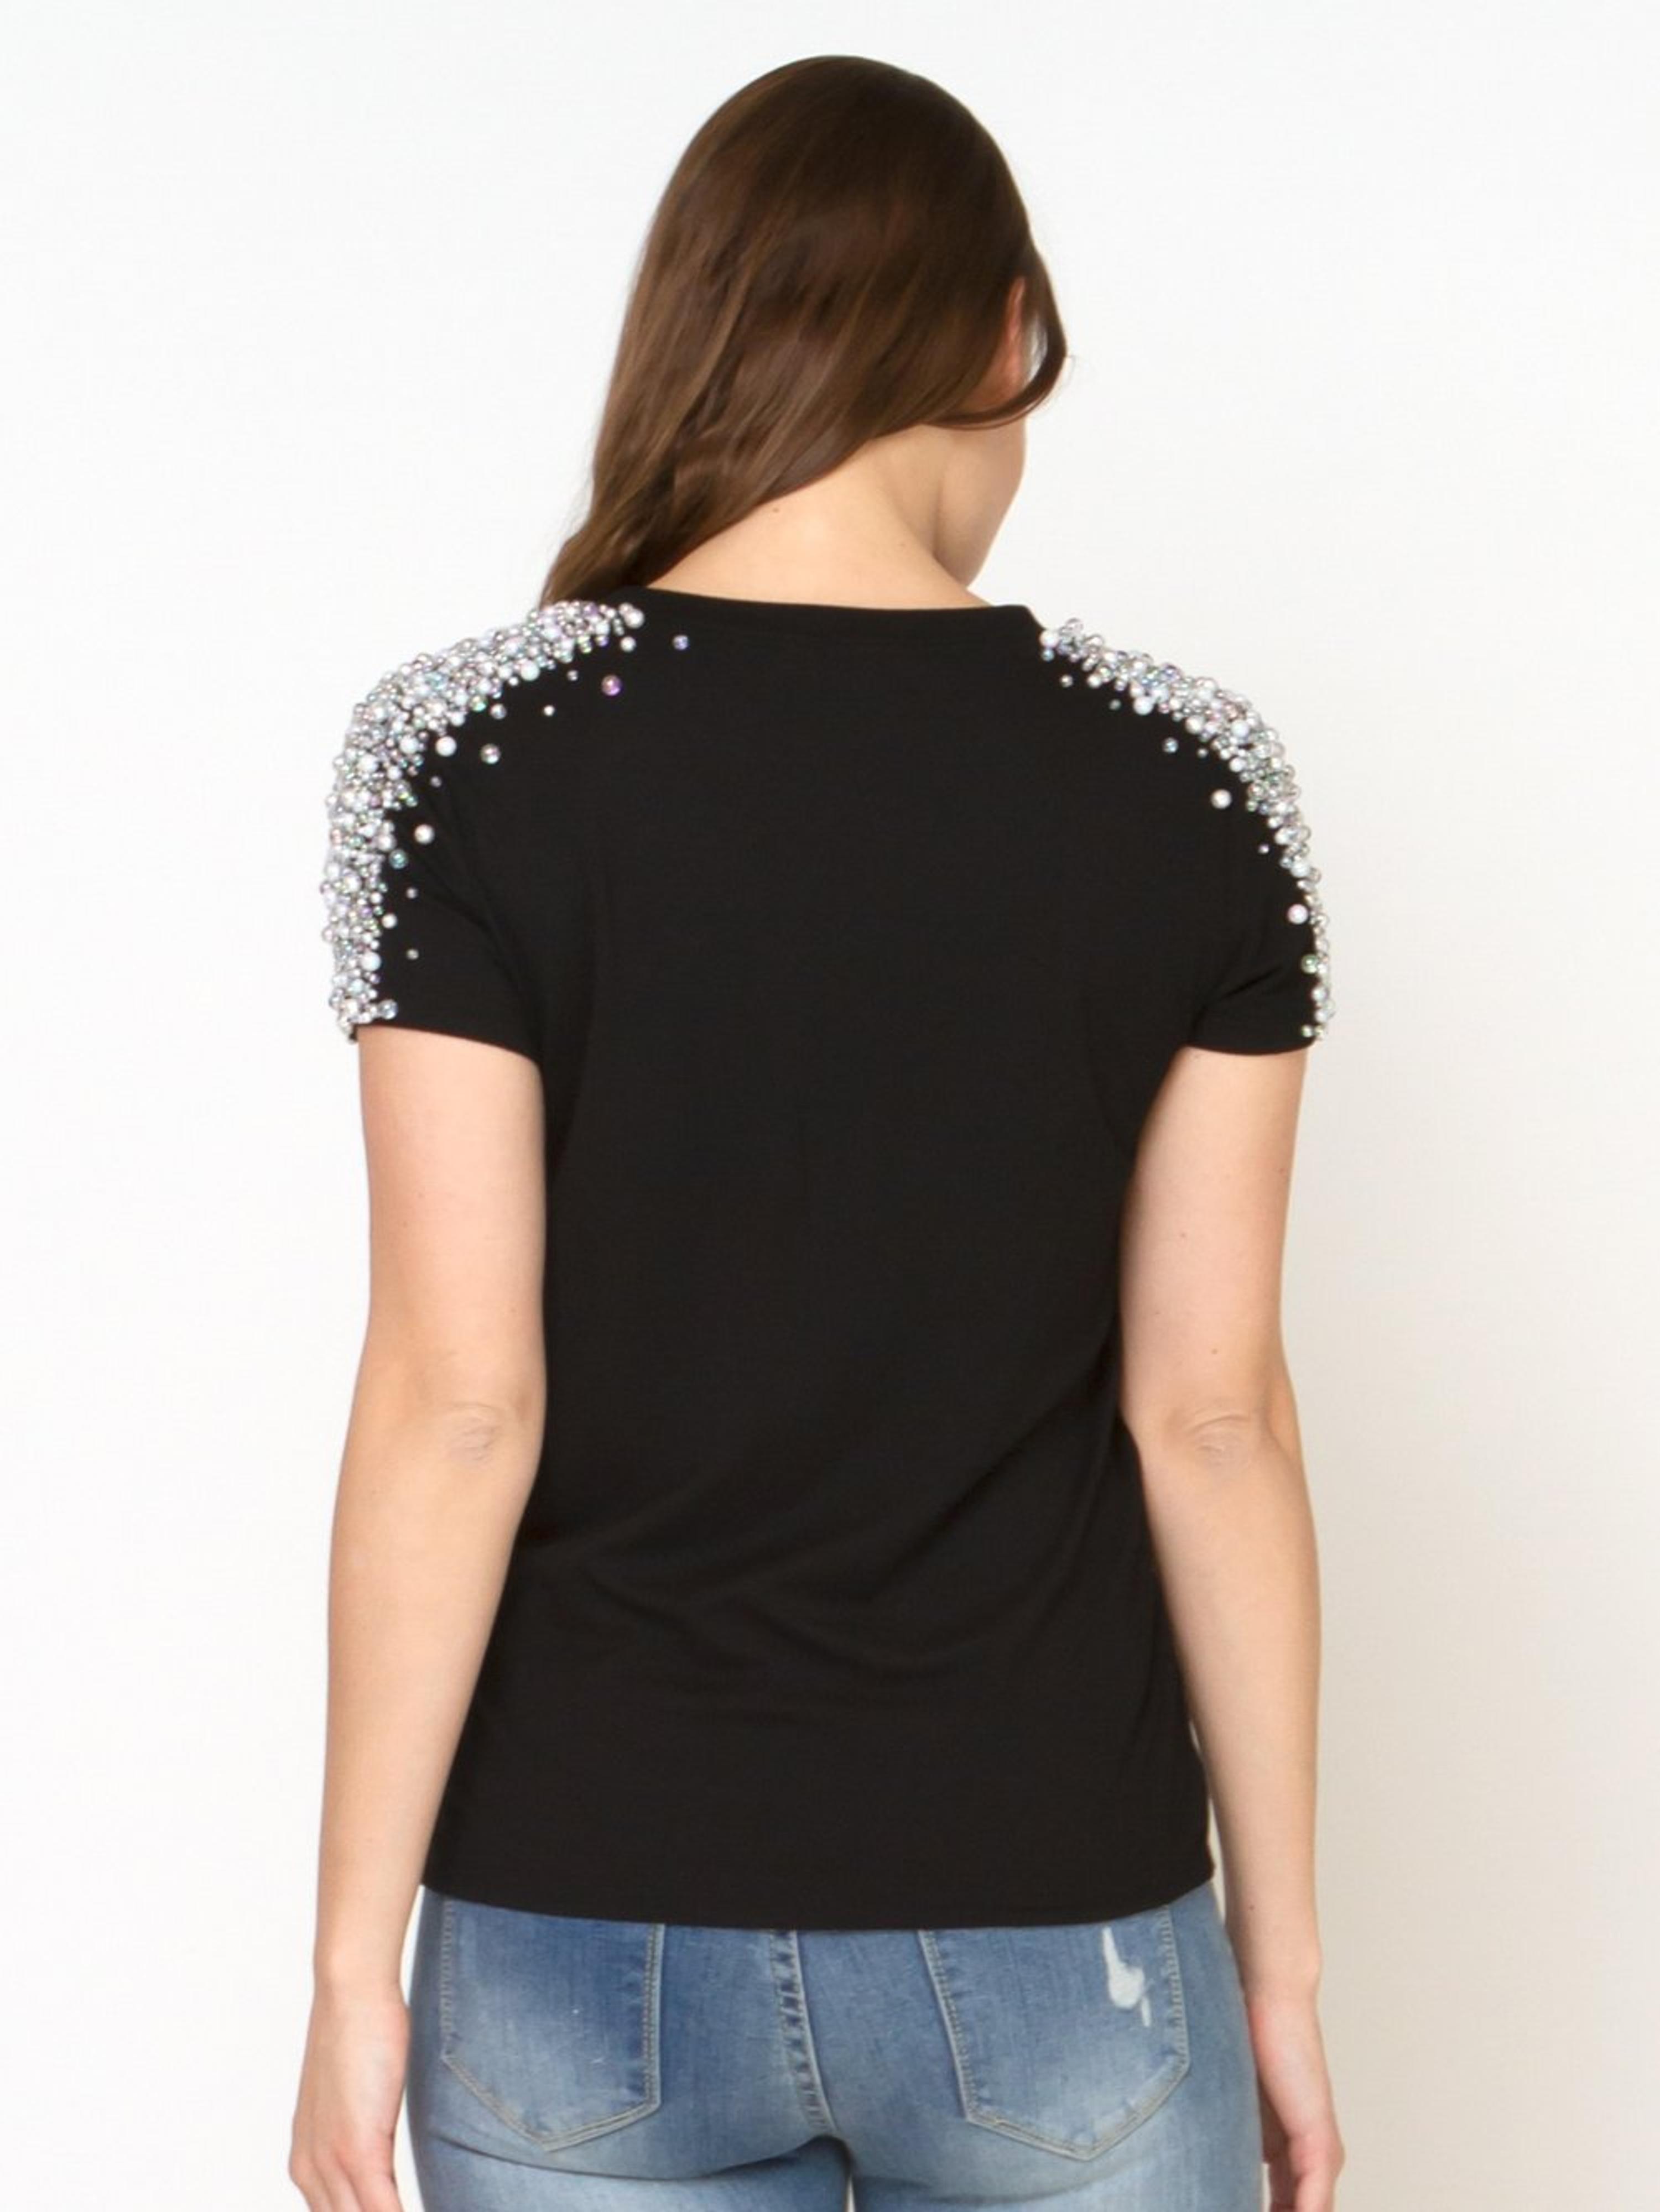 Gracia - Pearl Embellished T-shirt : Lillian June